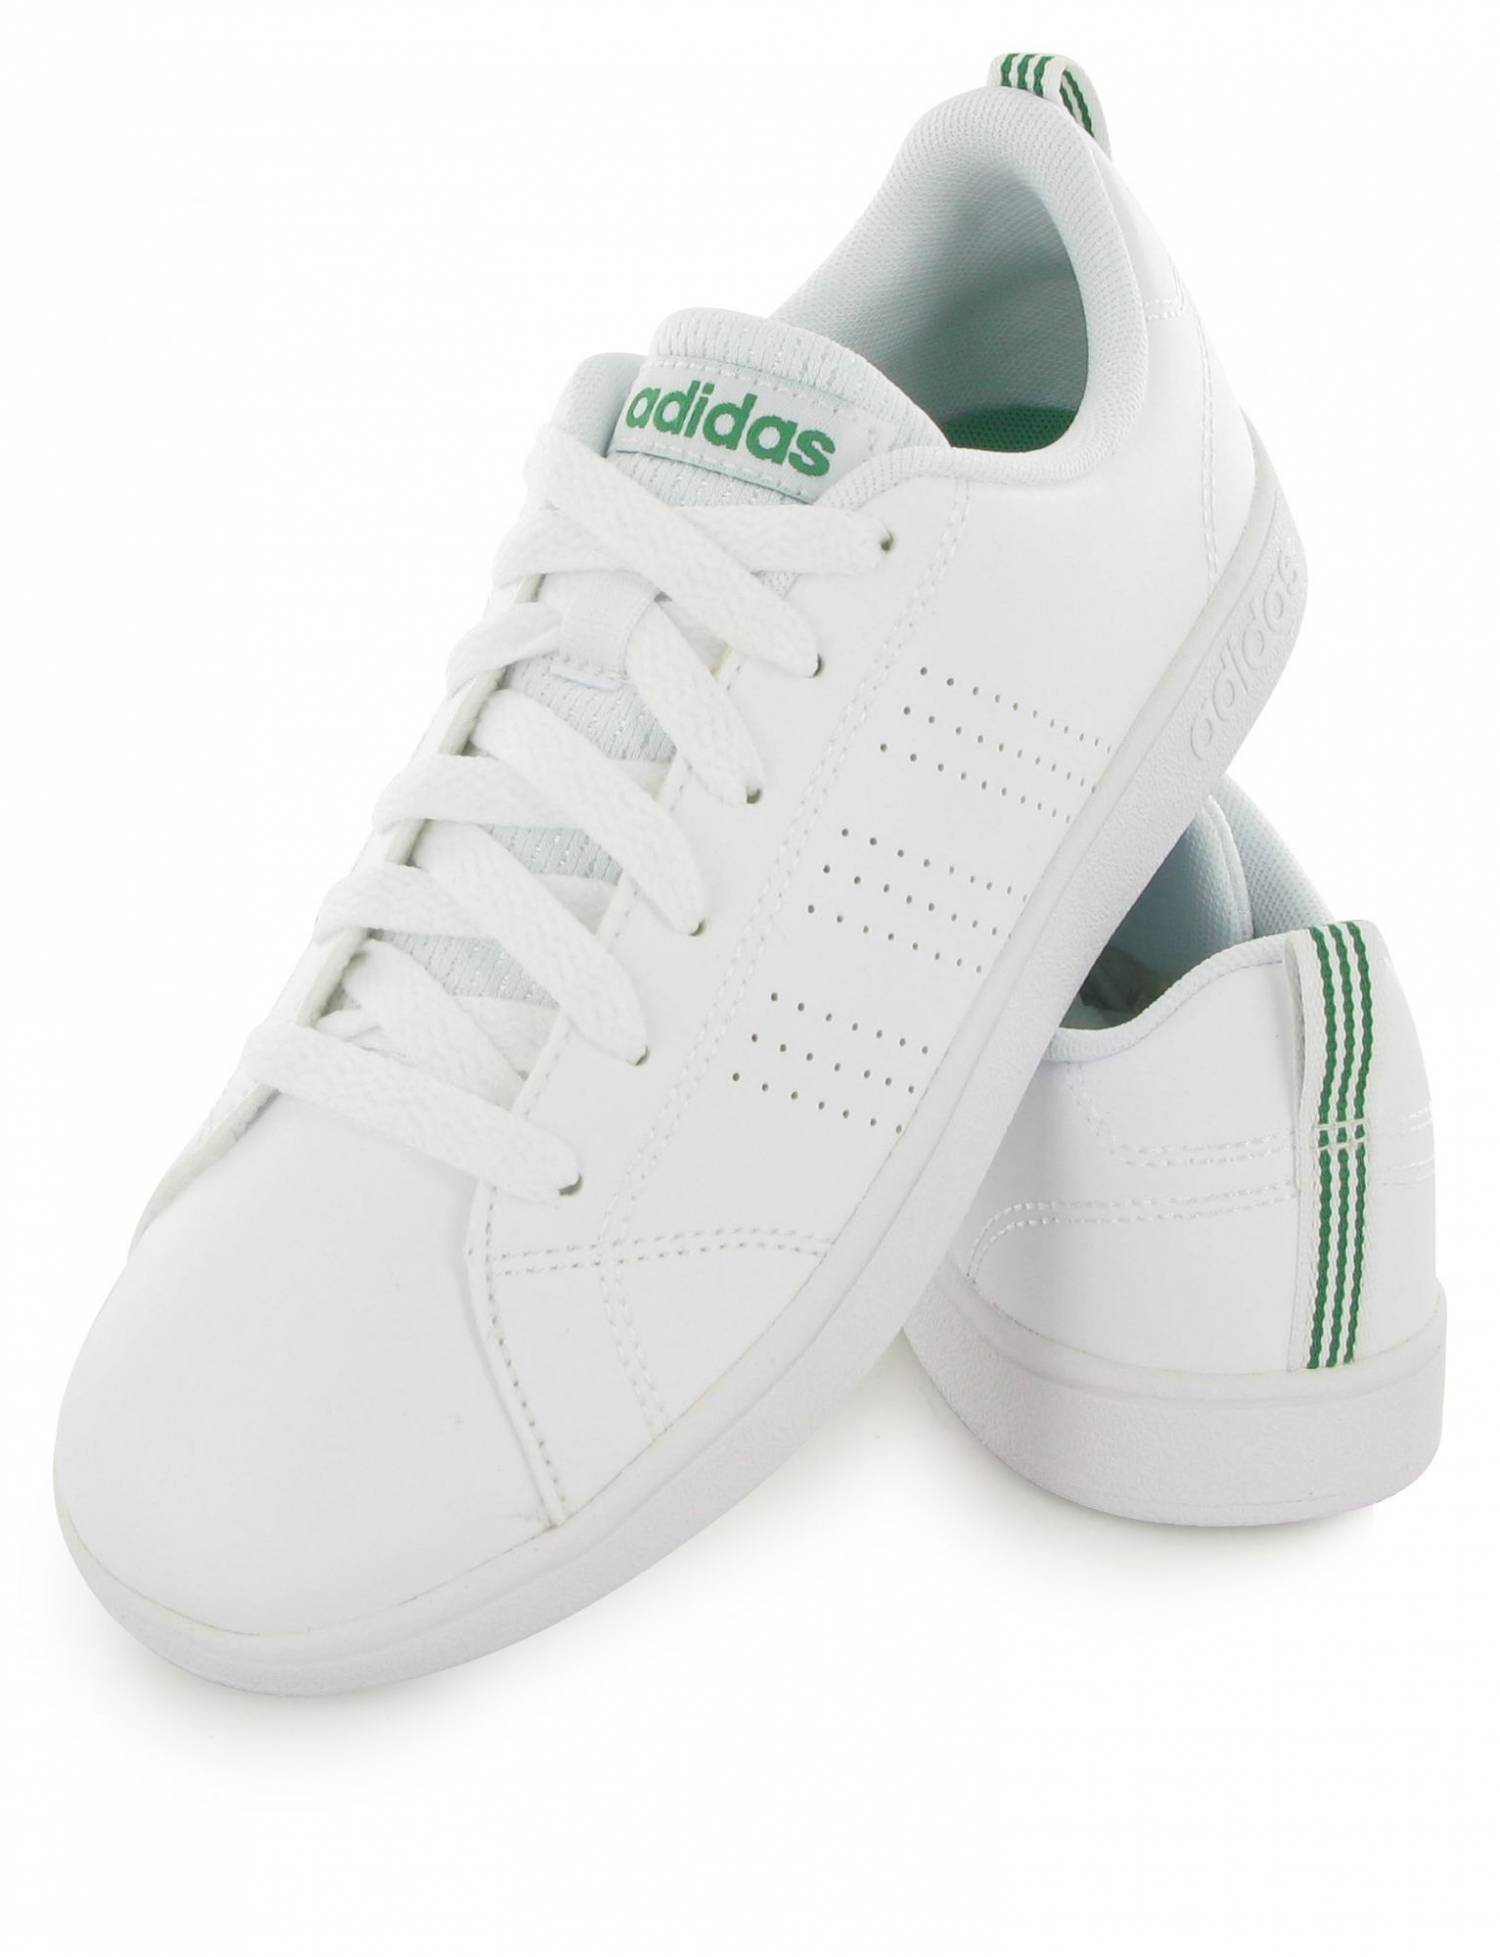 Adidas Neo Advantage Clean Junior Blanc Et Vert